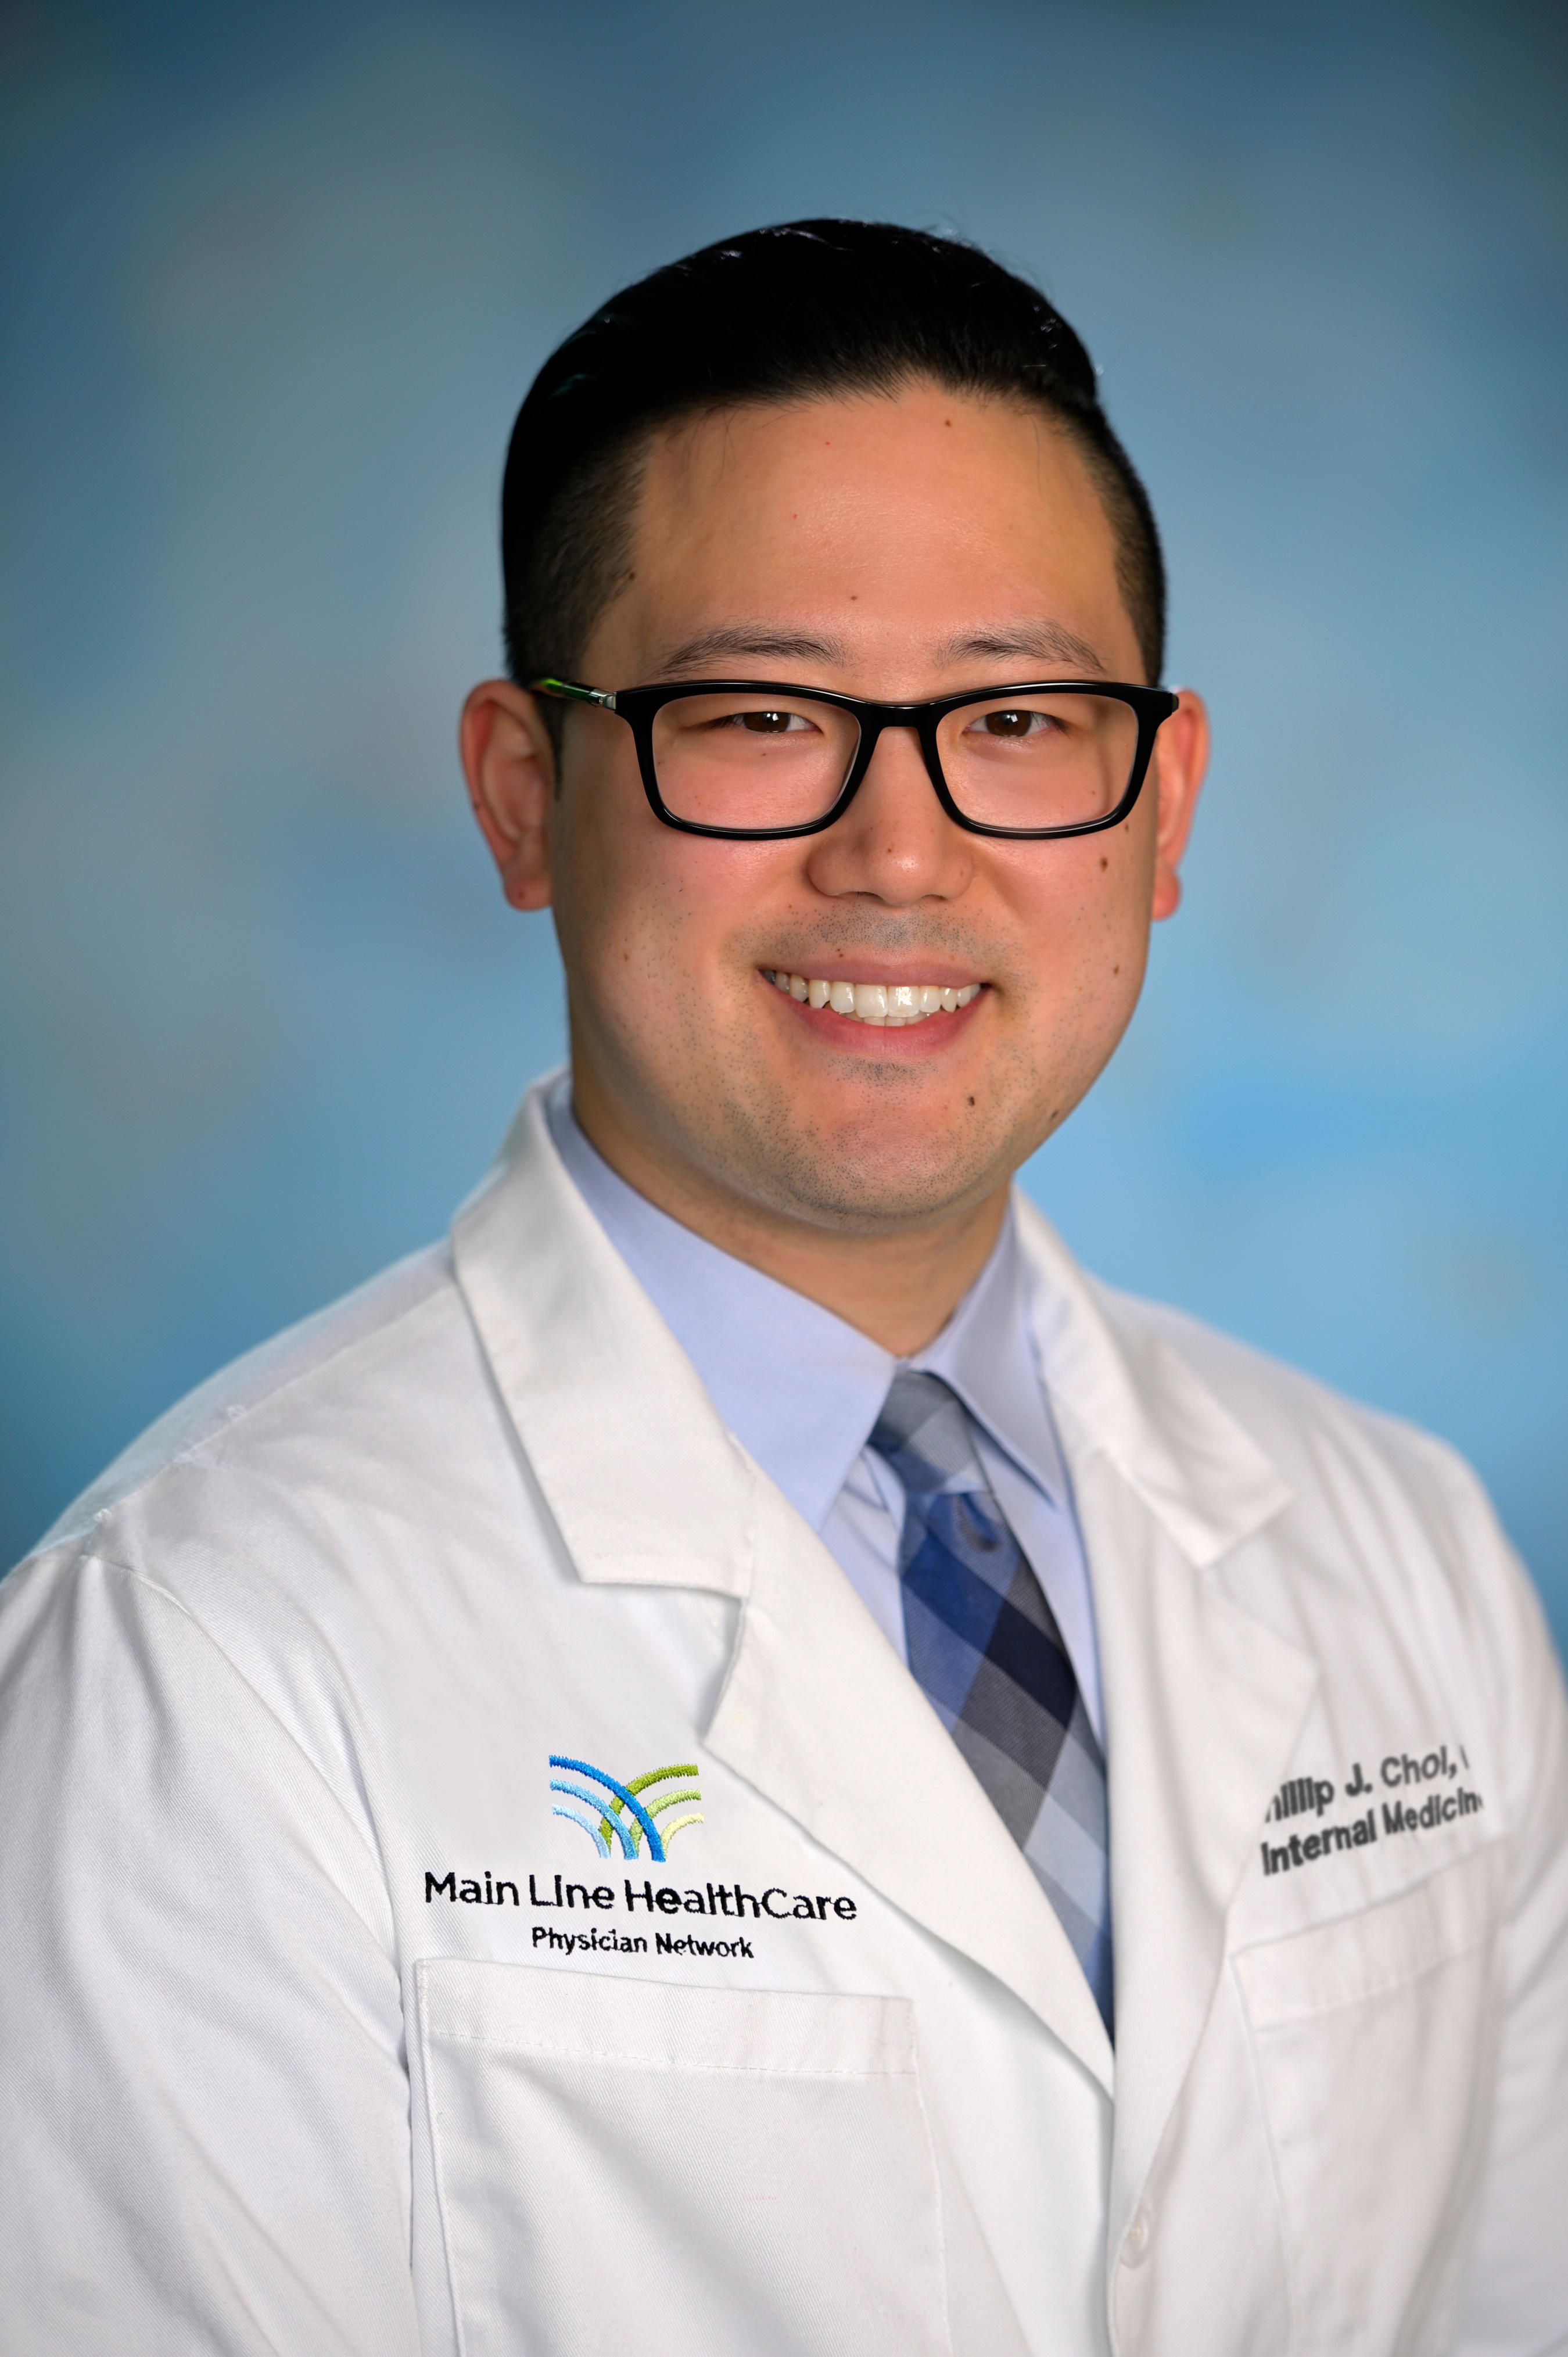 Headshot of Phillip J. Choi, MD